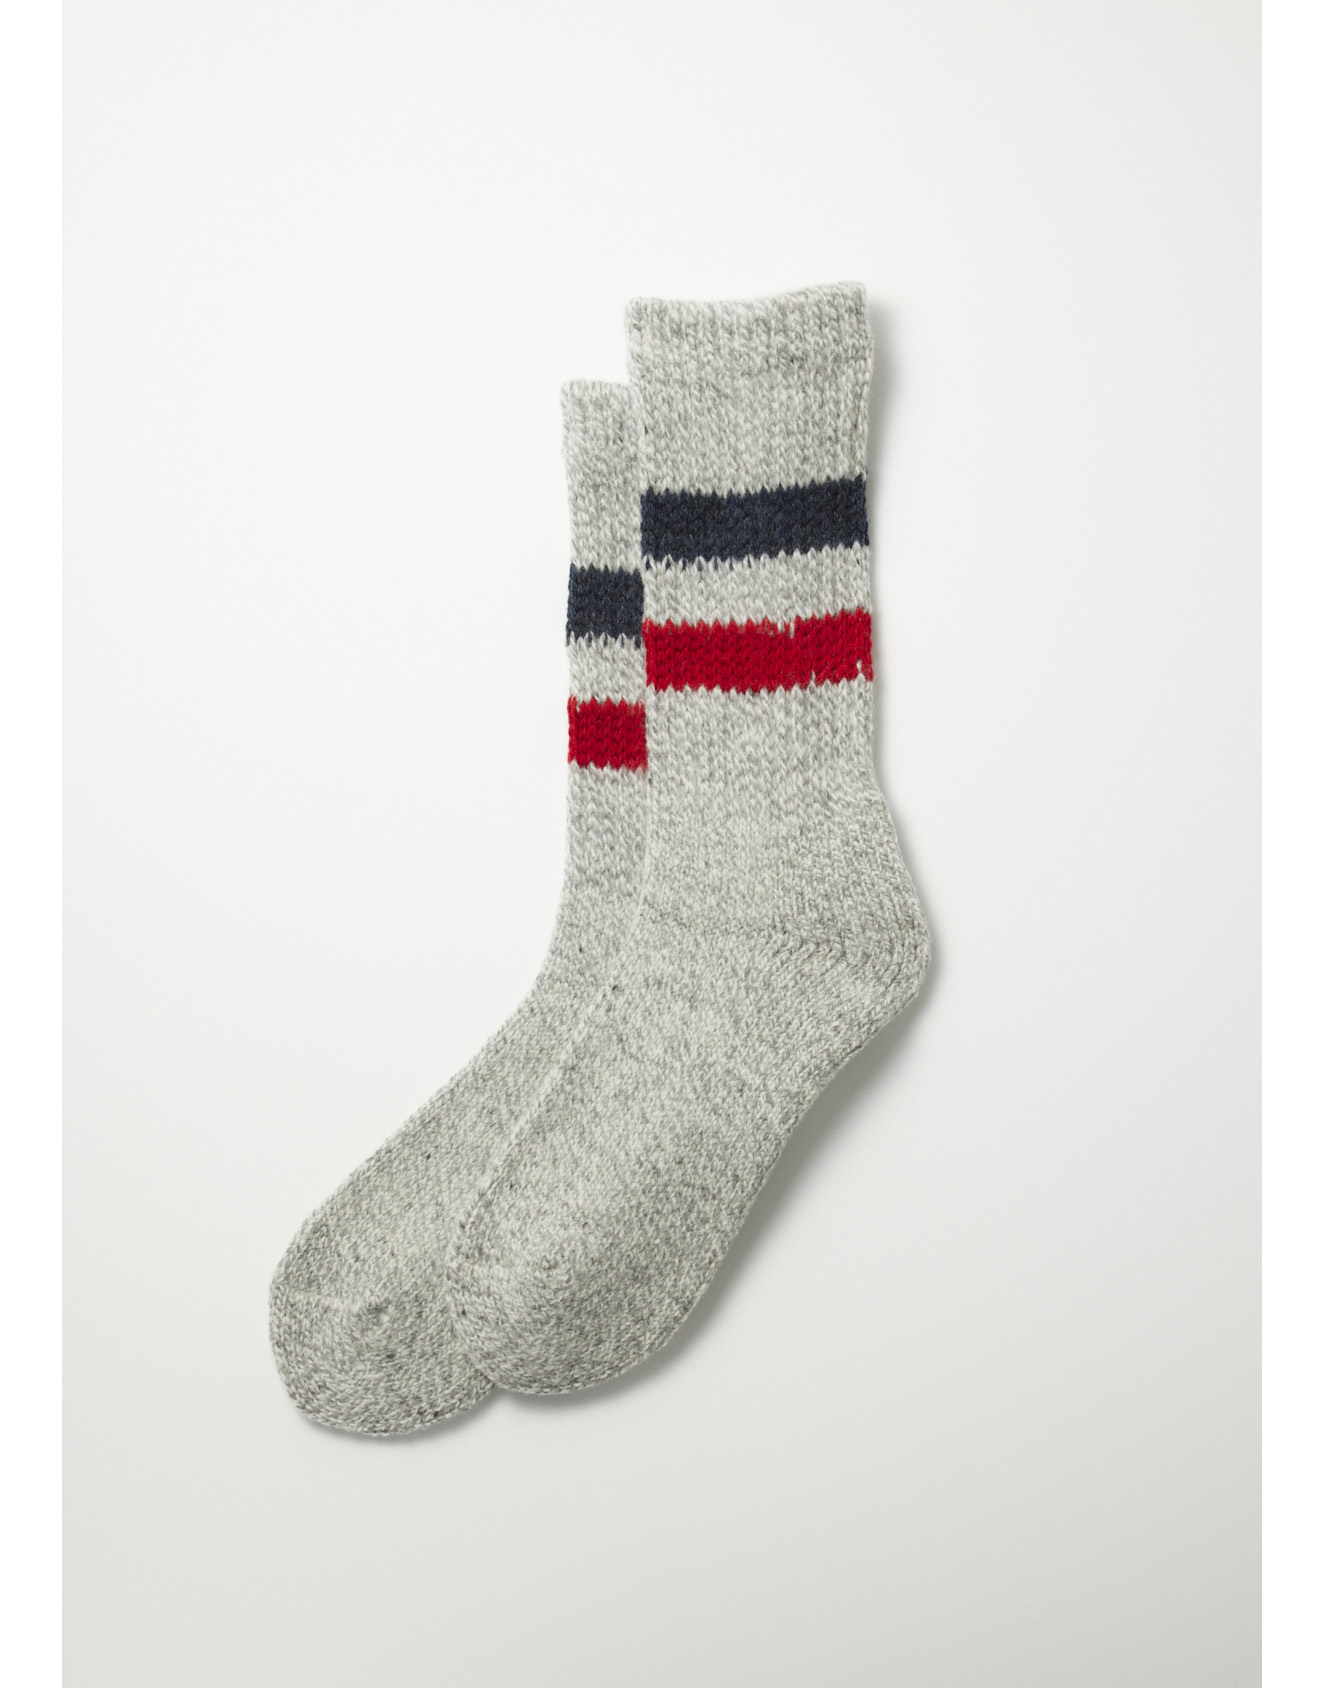 RoToTo – Retro Winter Outdoor Socks